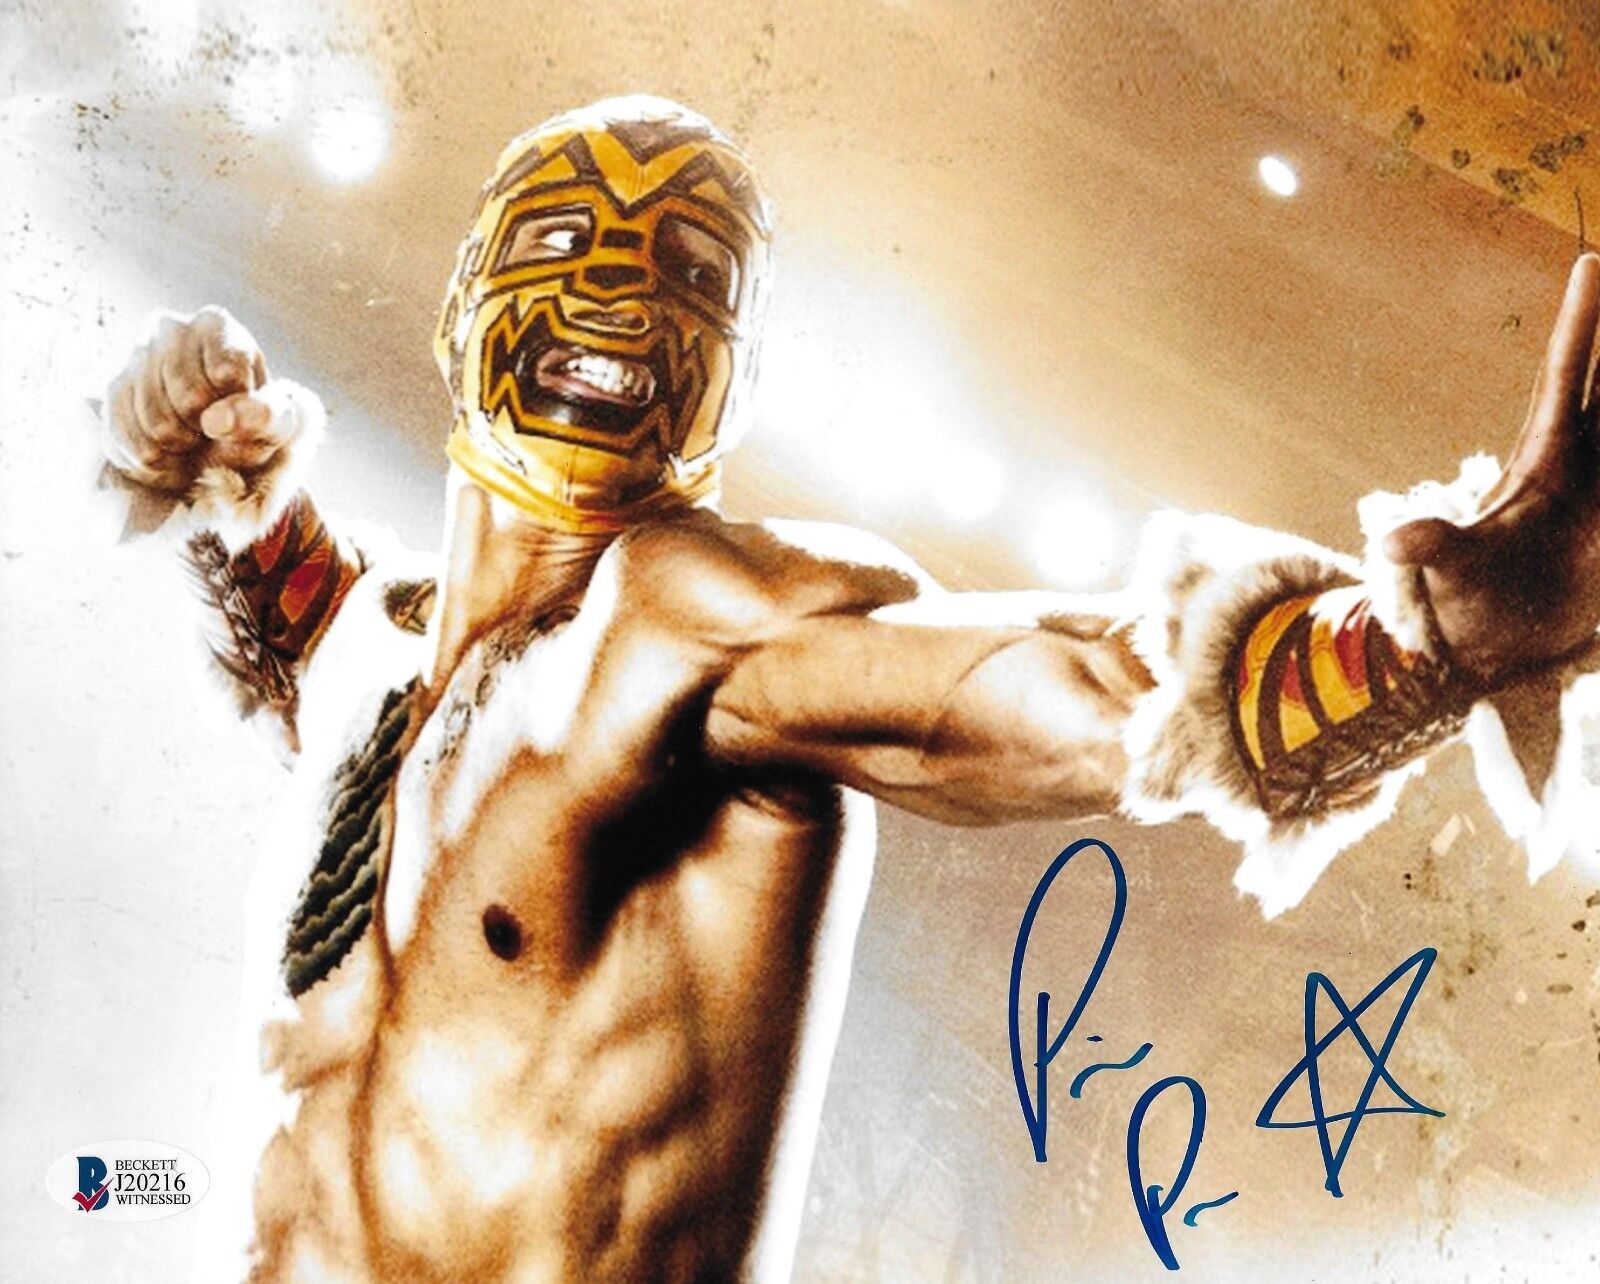 Prince Puma Signed 8x10 Photo Poster painting BAS COA Ricochet WWE Wrestling Lucha Underground 3